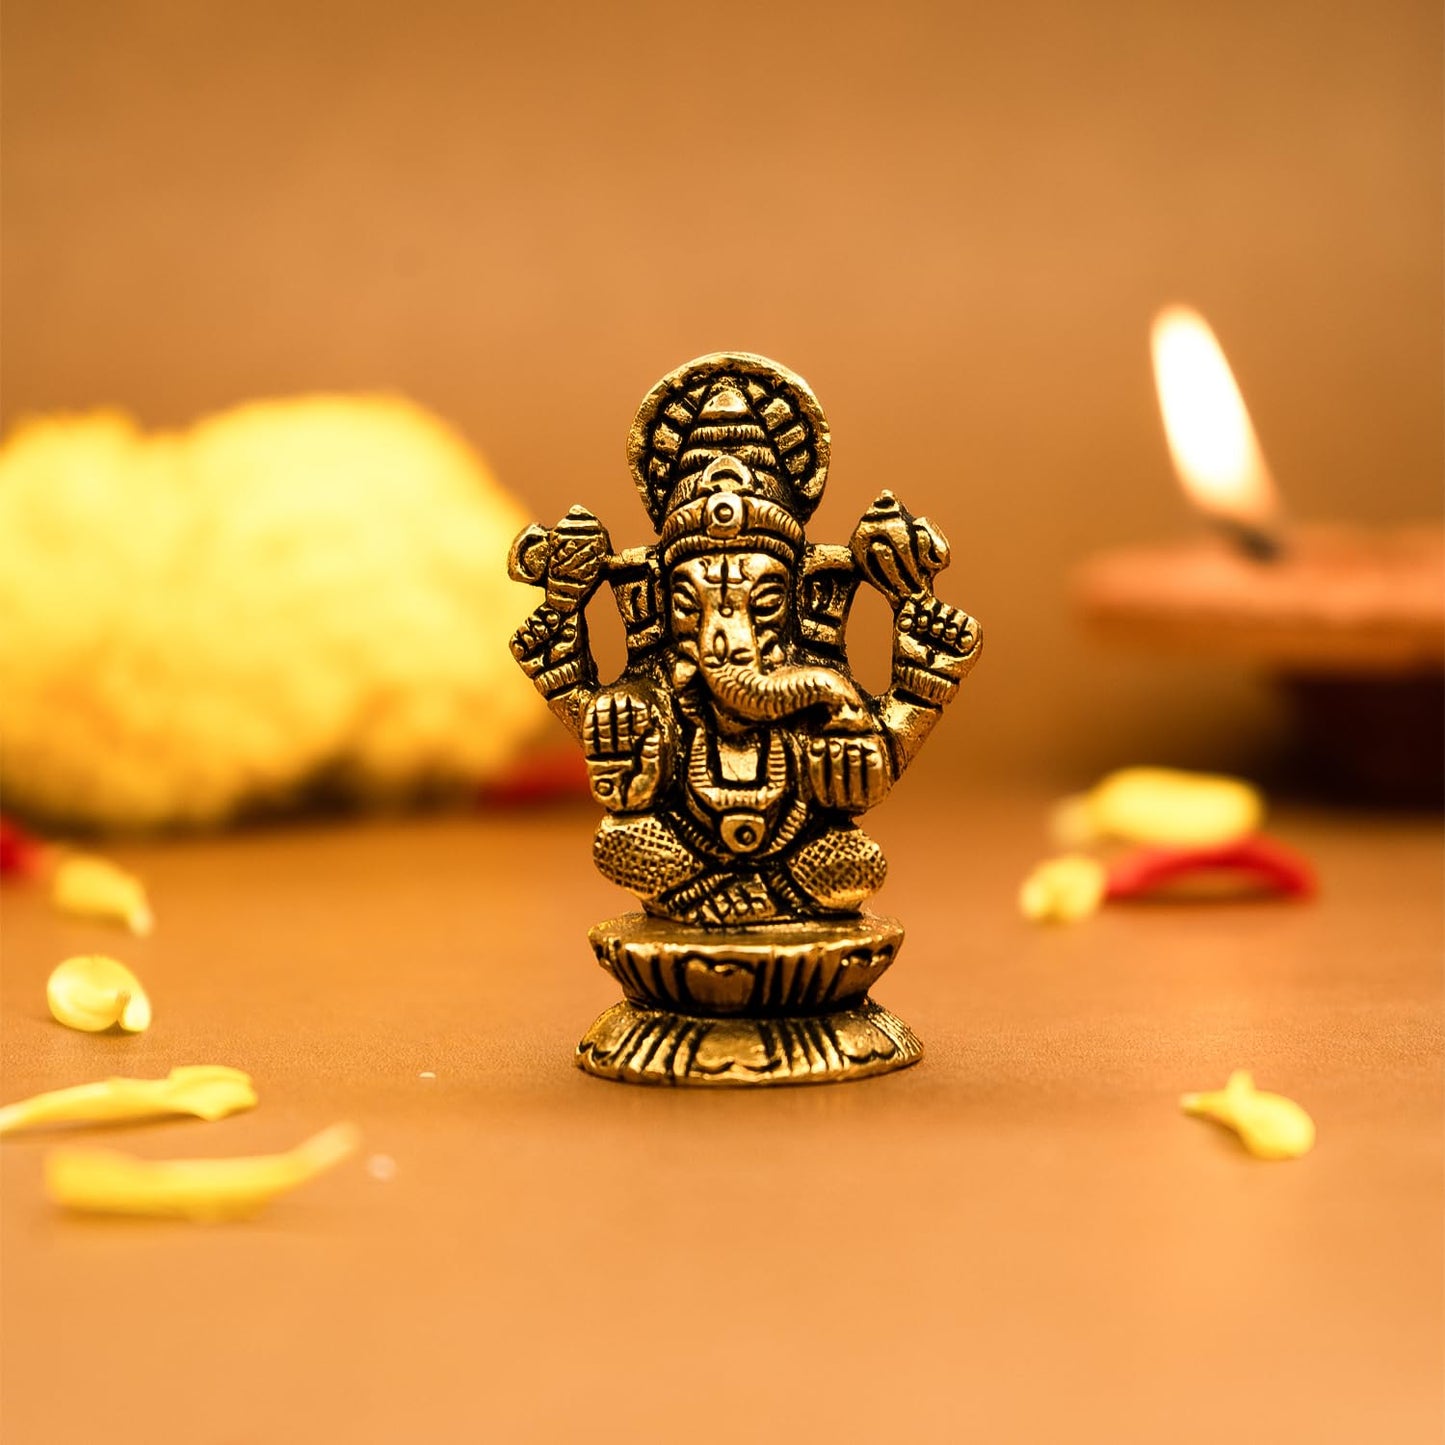 Ekhasa 100% Pure Brass Ganesha Idol (Size: 5.5 cm) | Pital Ganesh Murti for Pooja Room, Home Decor, Office Desk and Car Dashboard | Vinayagar Statue for Diwali Puja